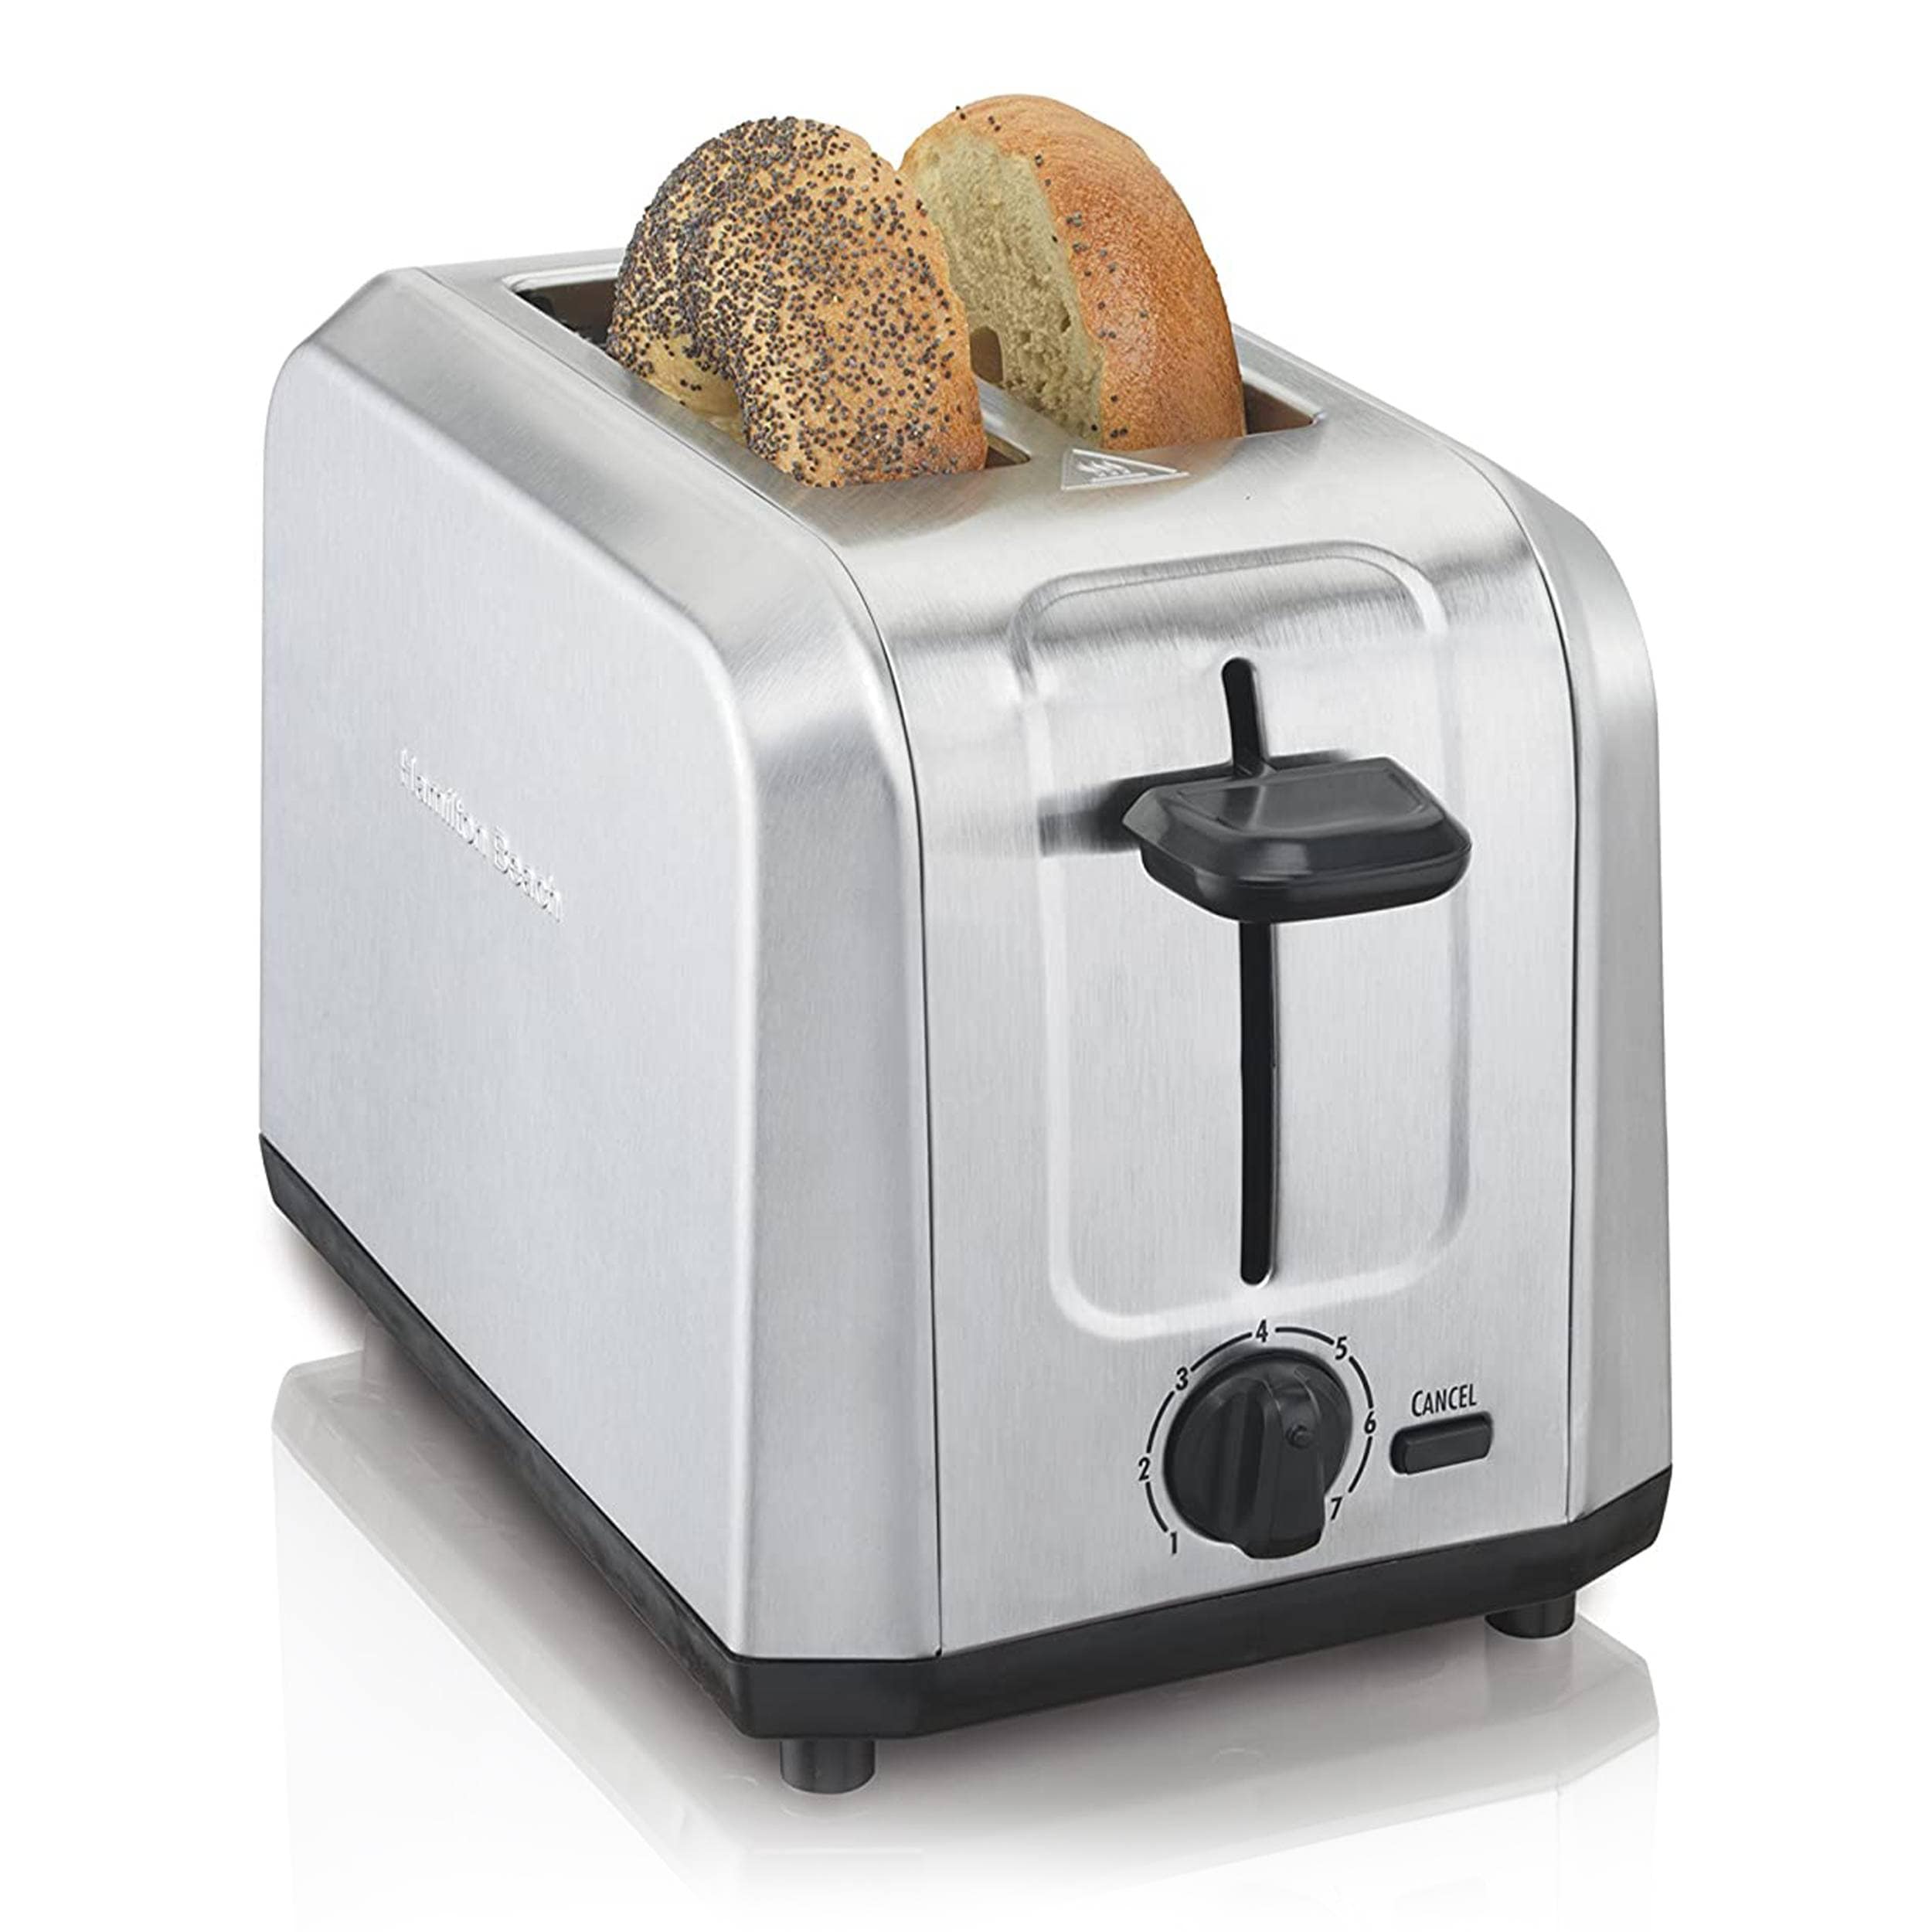   Basics 4 Slot Toaster, Brushed Silver: Home & Kitchen